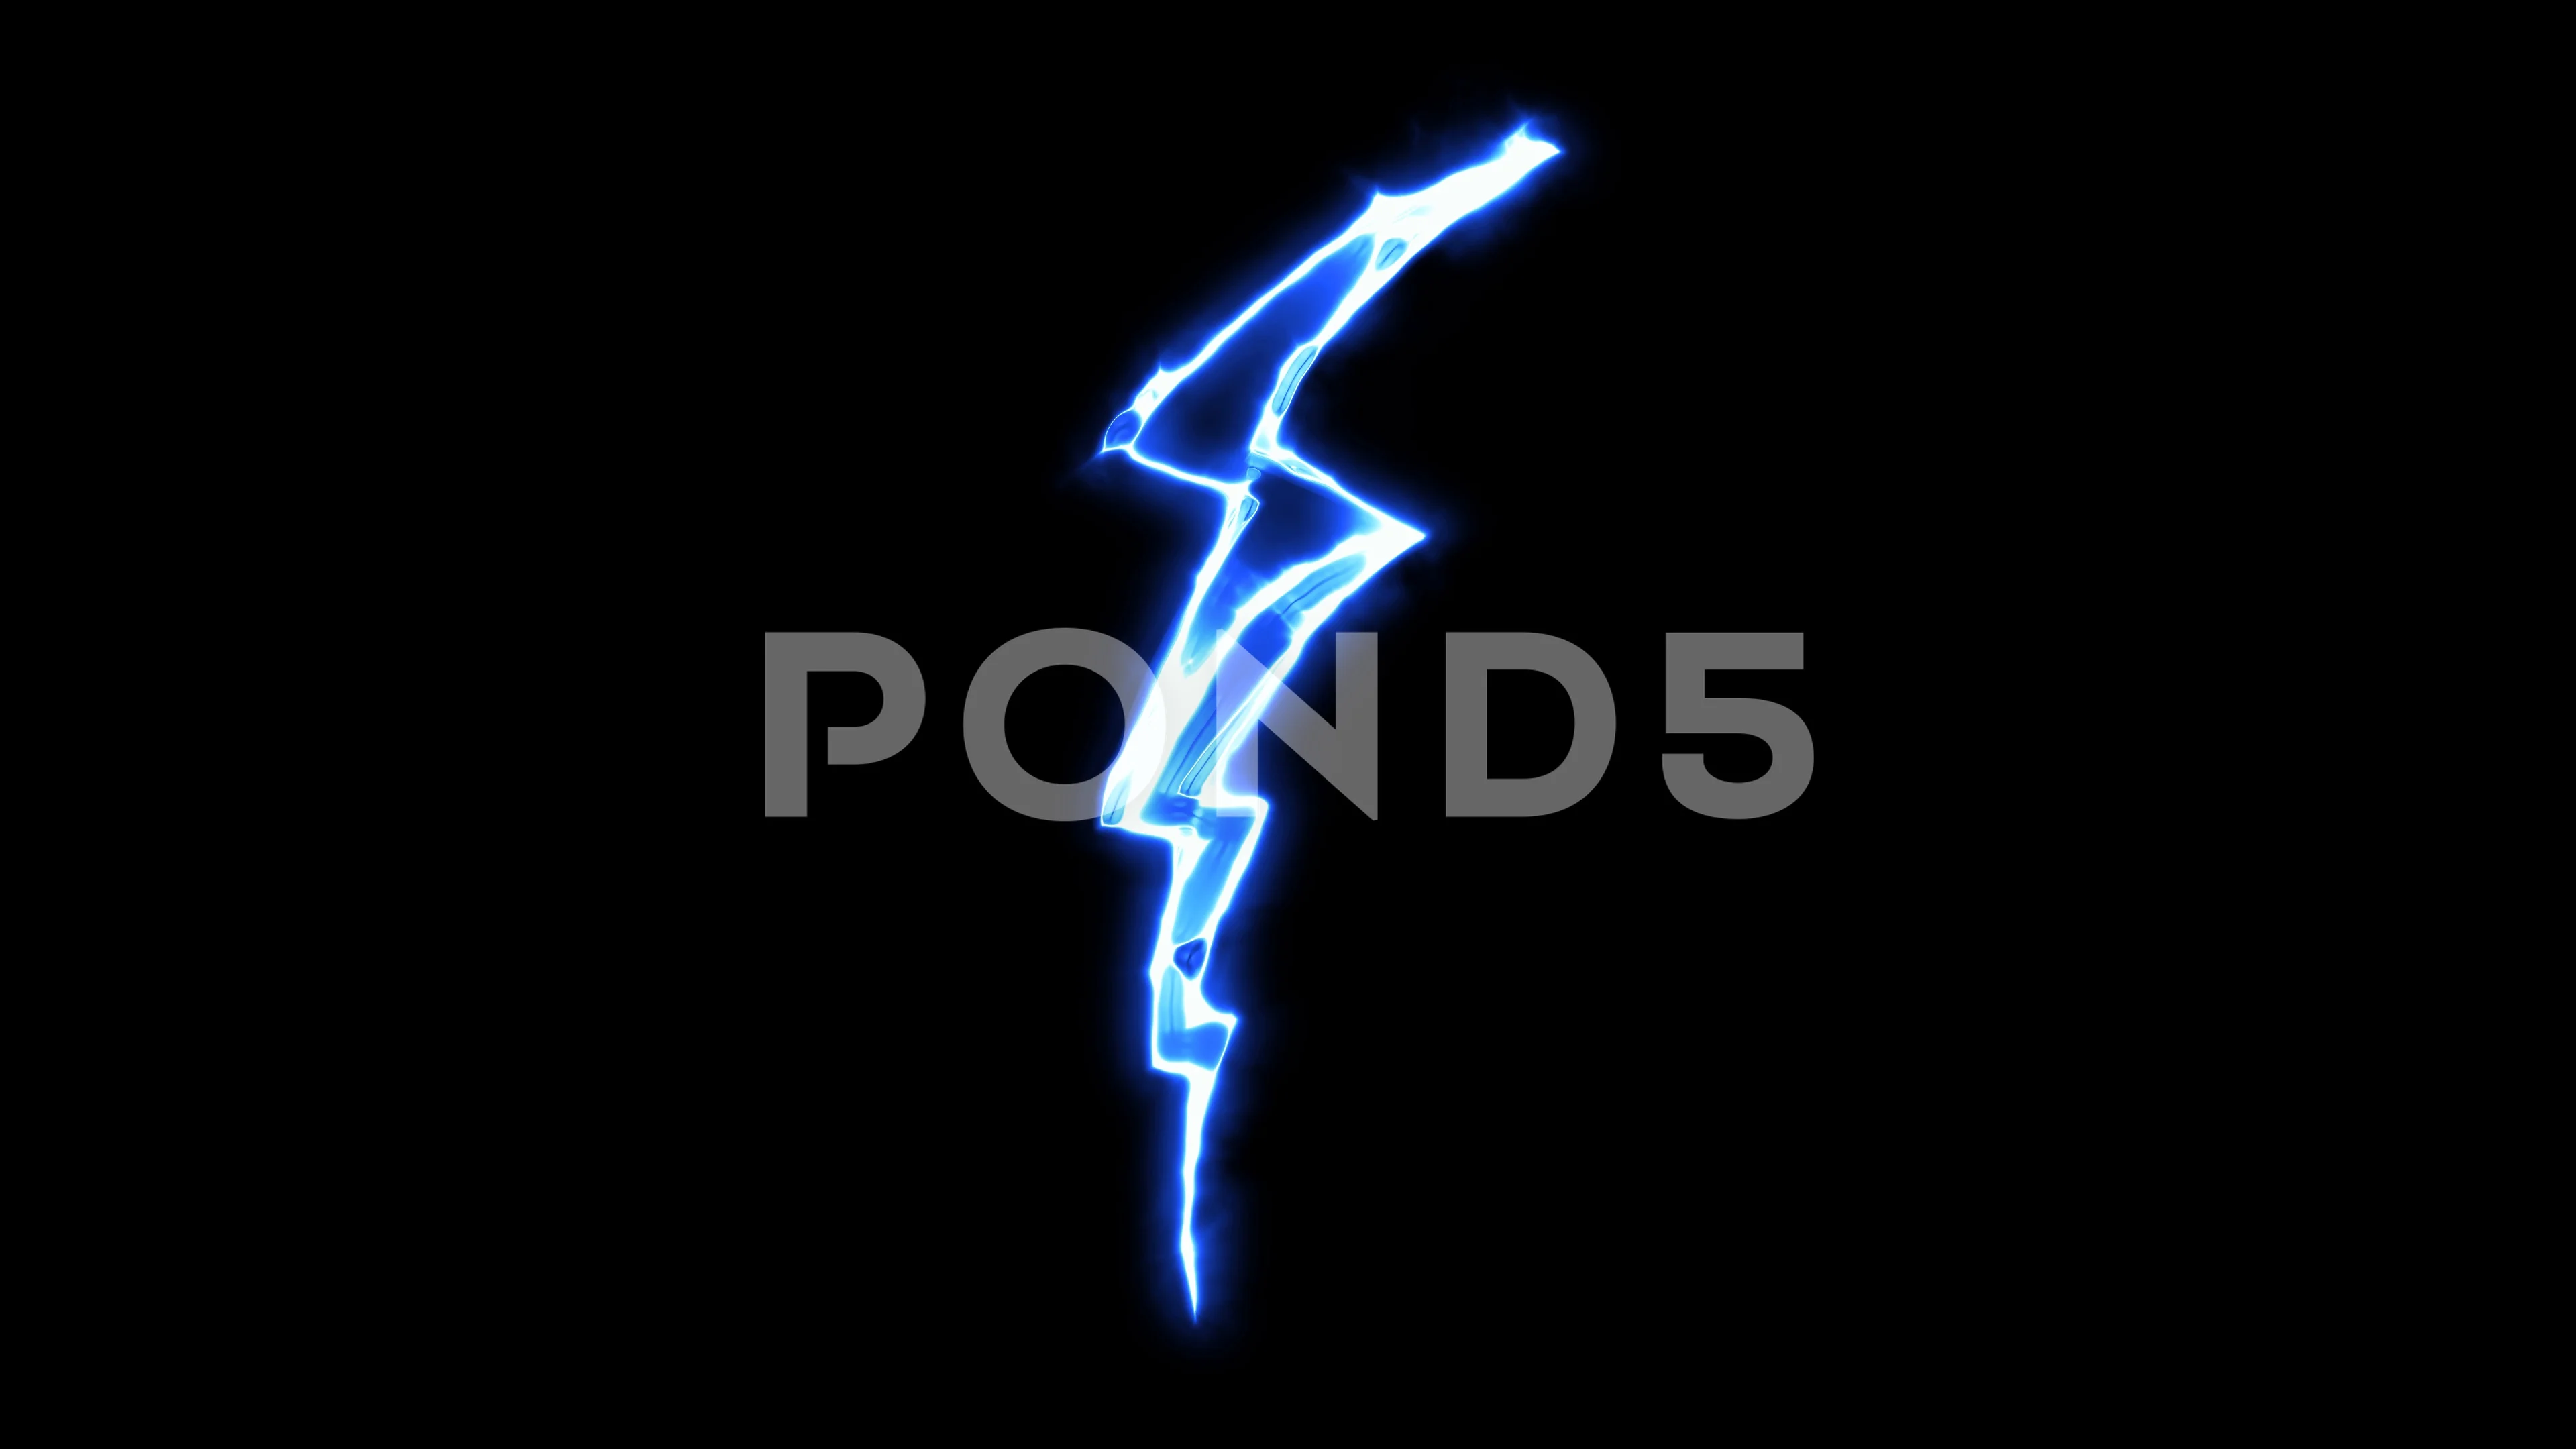 Lightning Fx Stock Video Footage | Royalty Free Lightning Fx Videos | Pond5